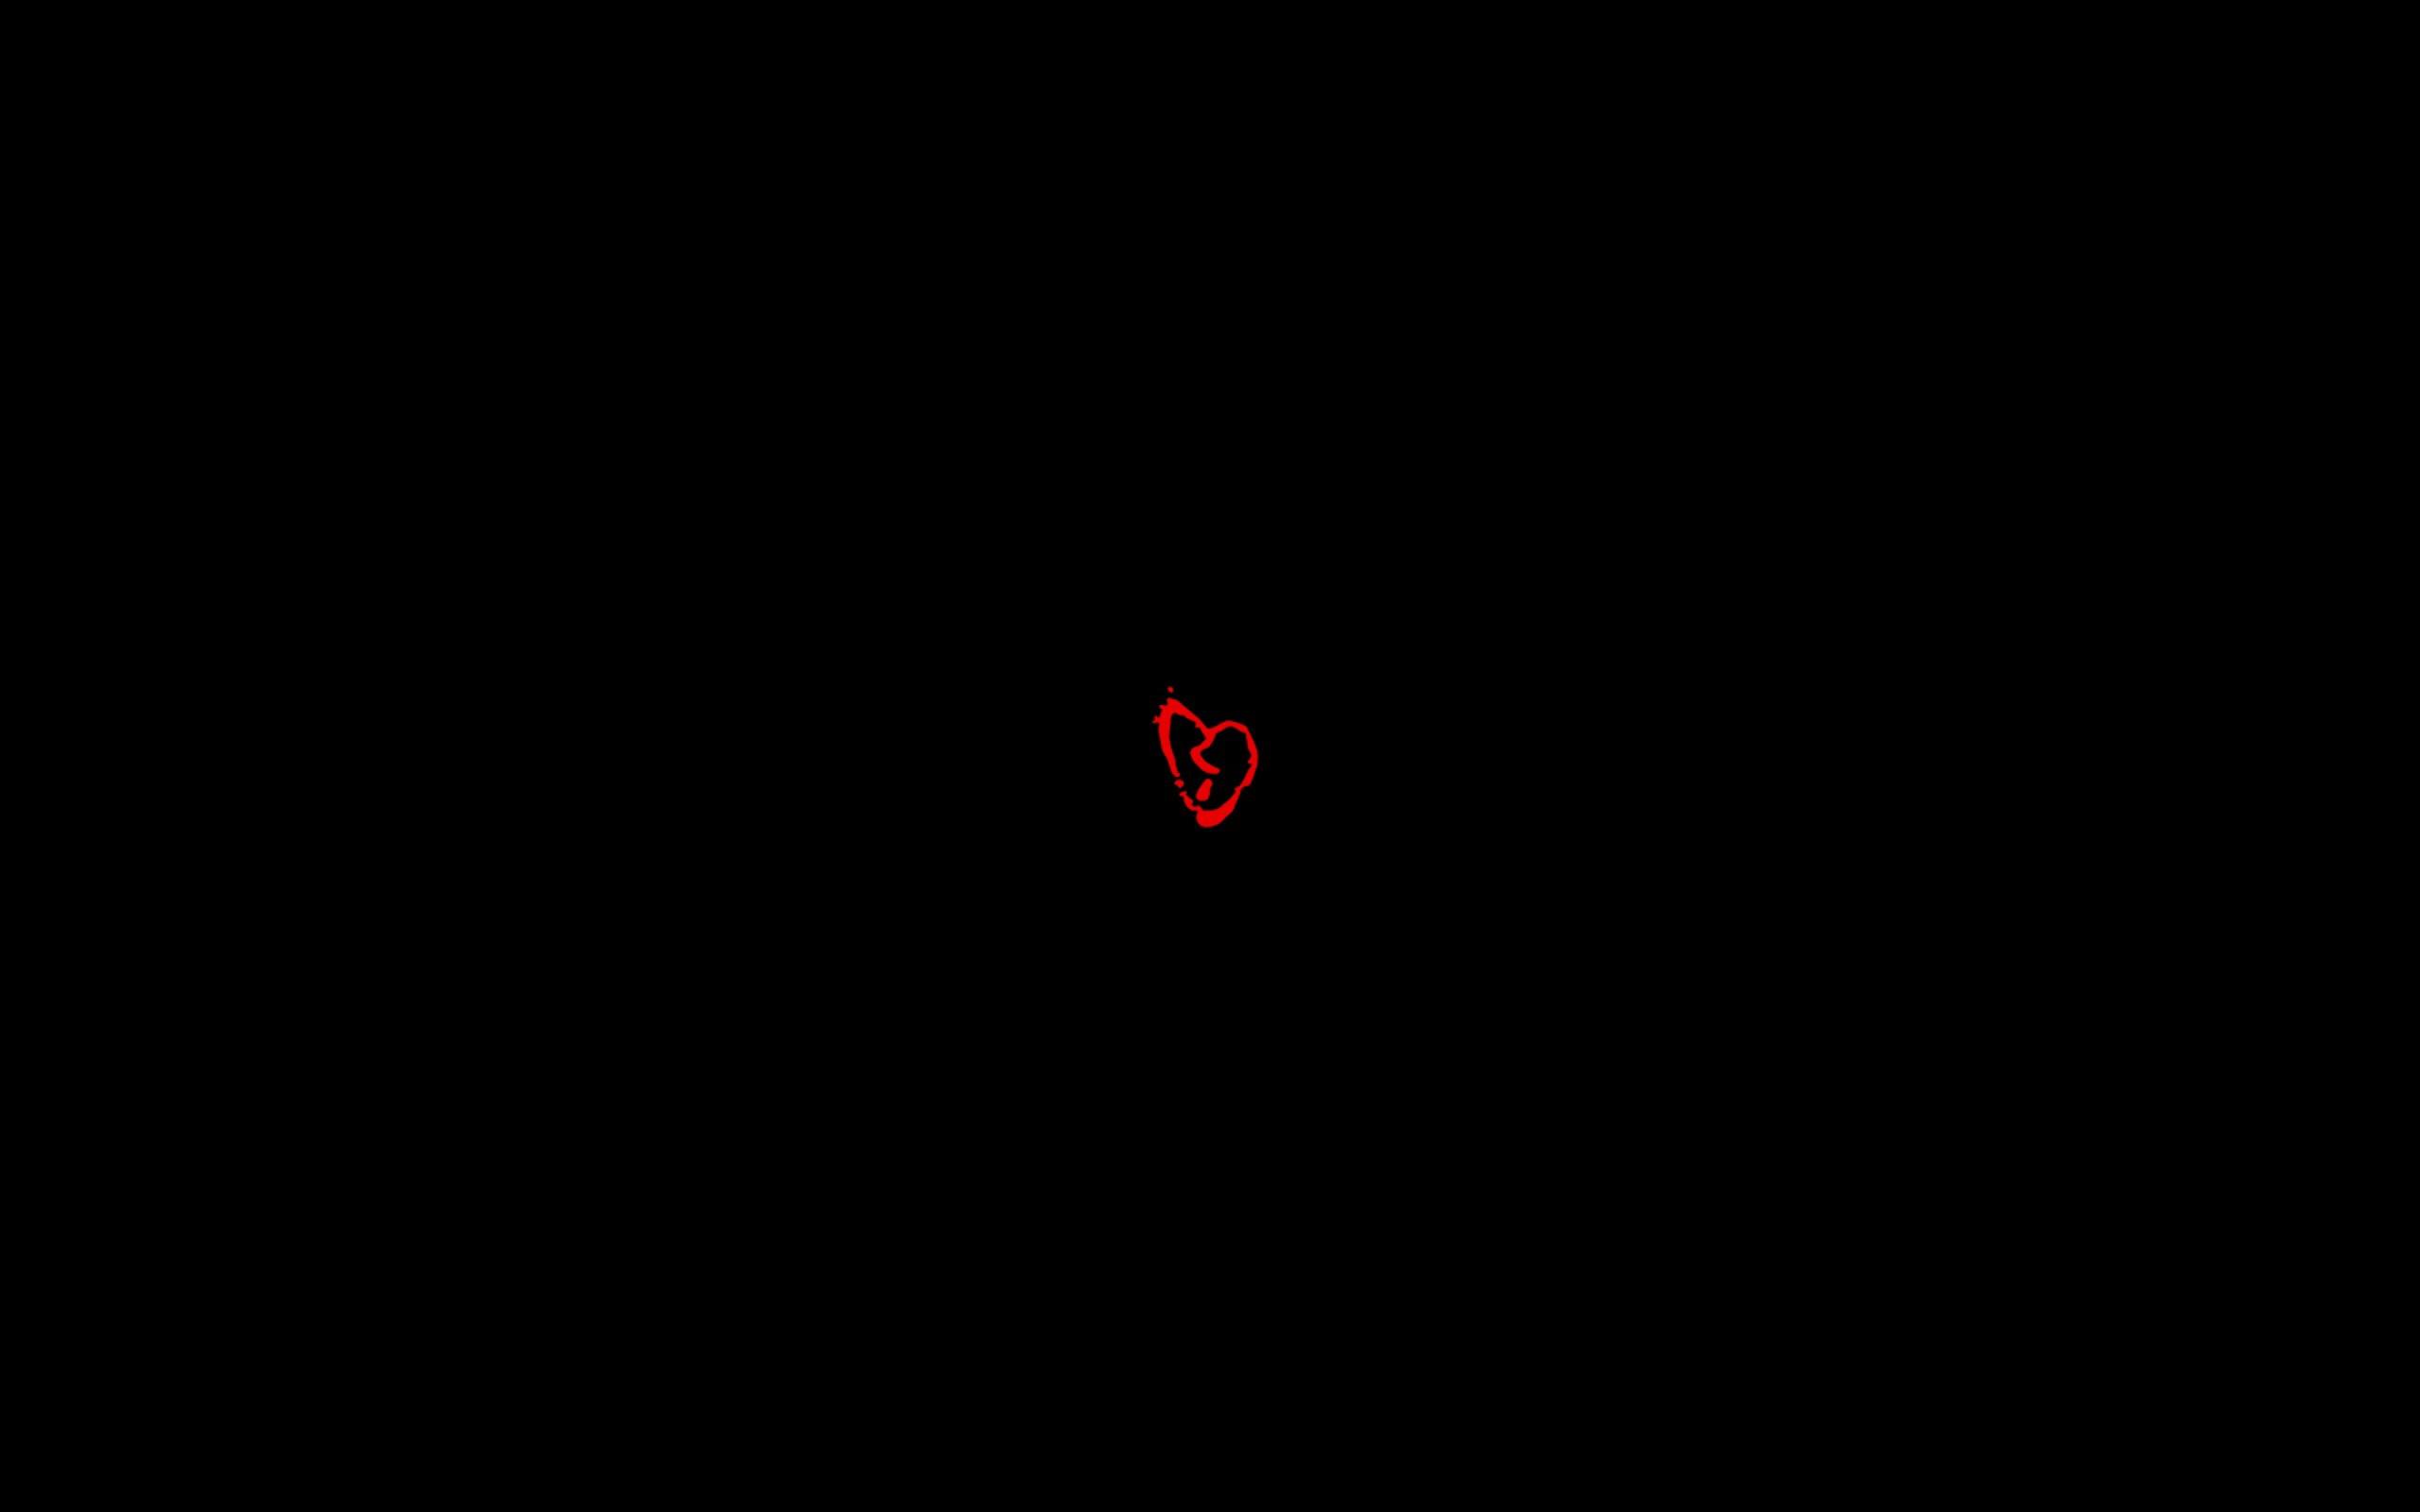 I made a red heartbreak wallpaperreddit.com